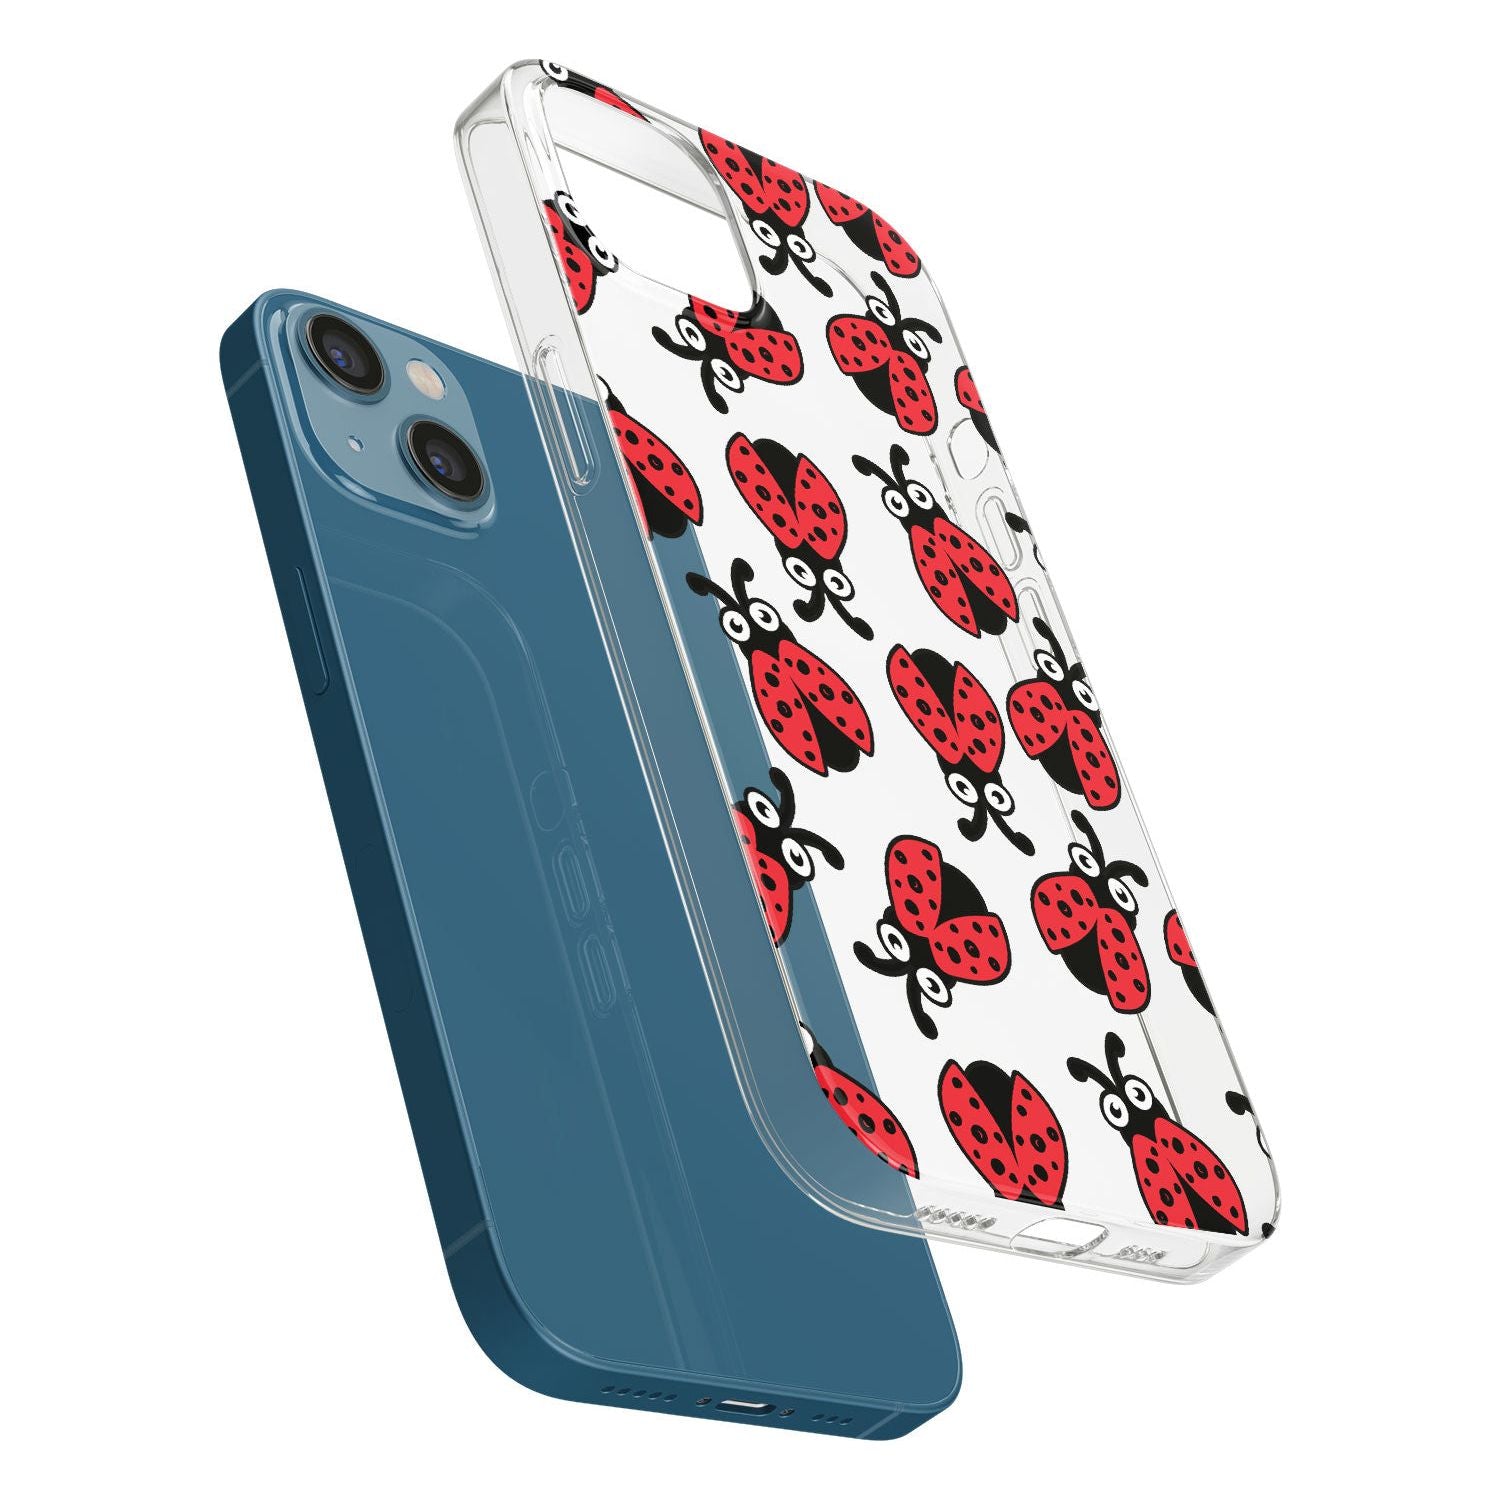 Ladybug PatternPhone Case for iPhone 13 Mini